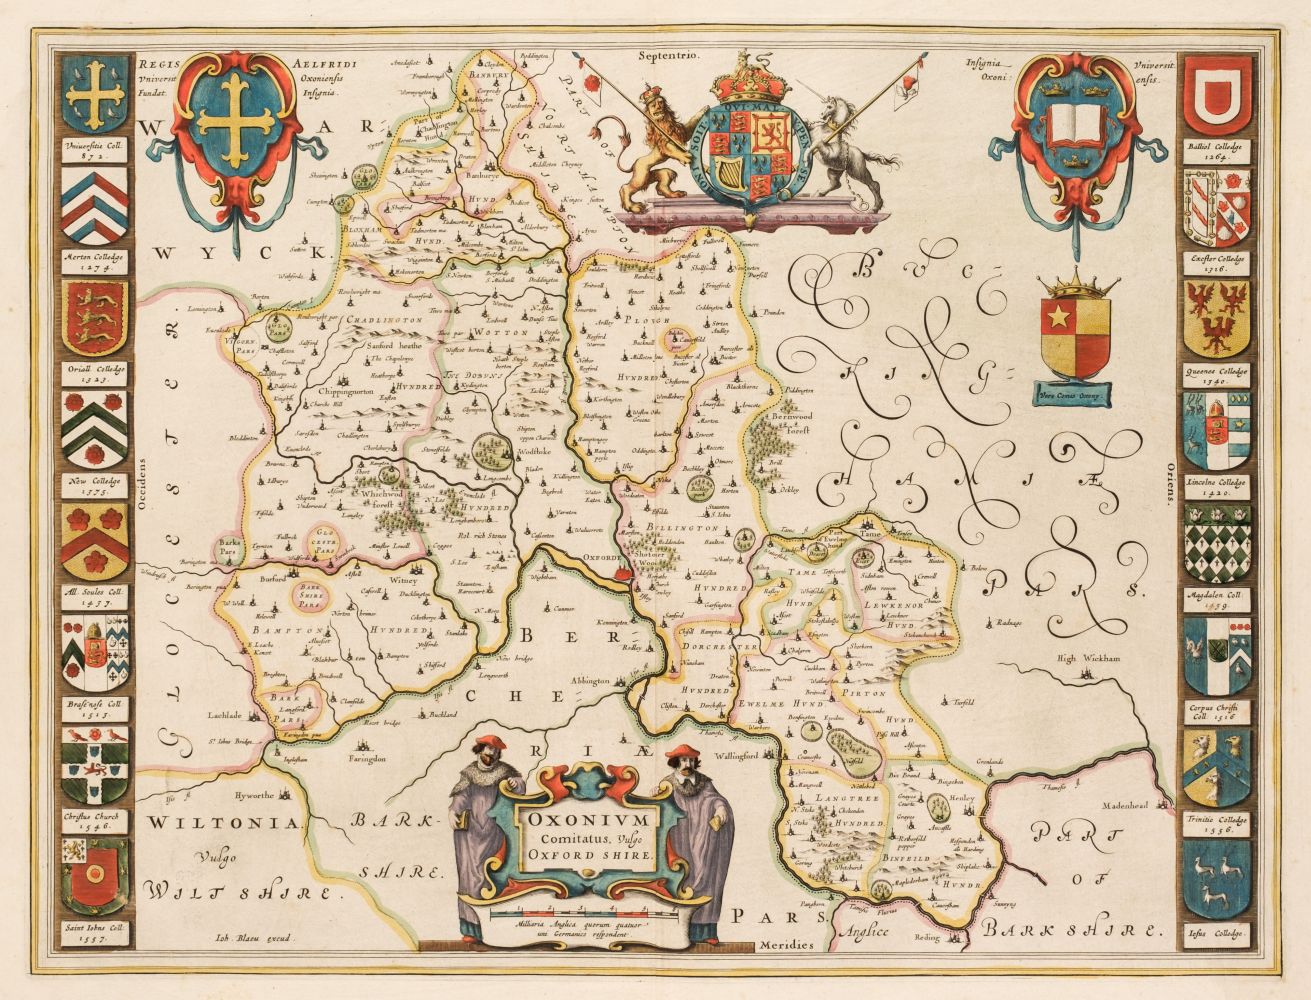 Oxfordshire. Blaeu (Johannes), Oxonium Comitatus vulgo Oxford Shire, Amsterdam, circa 1646